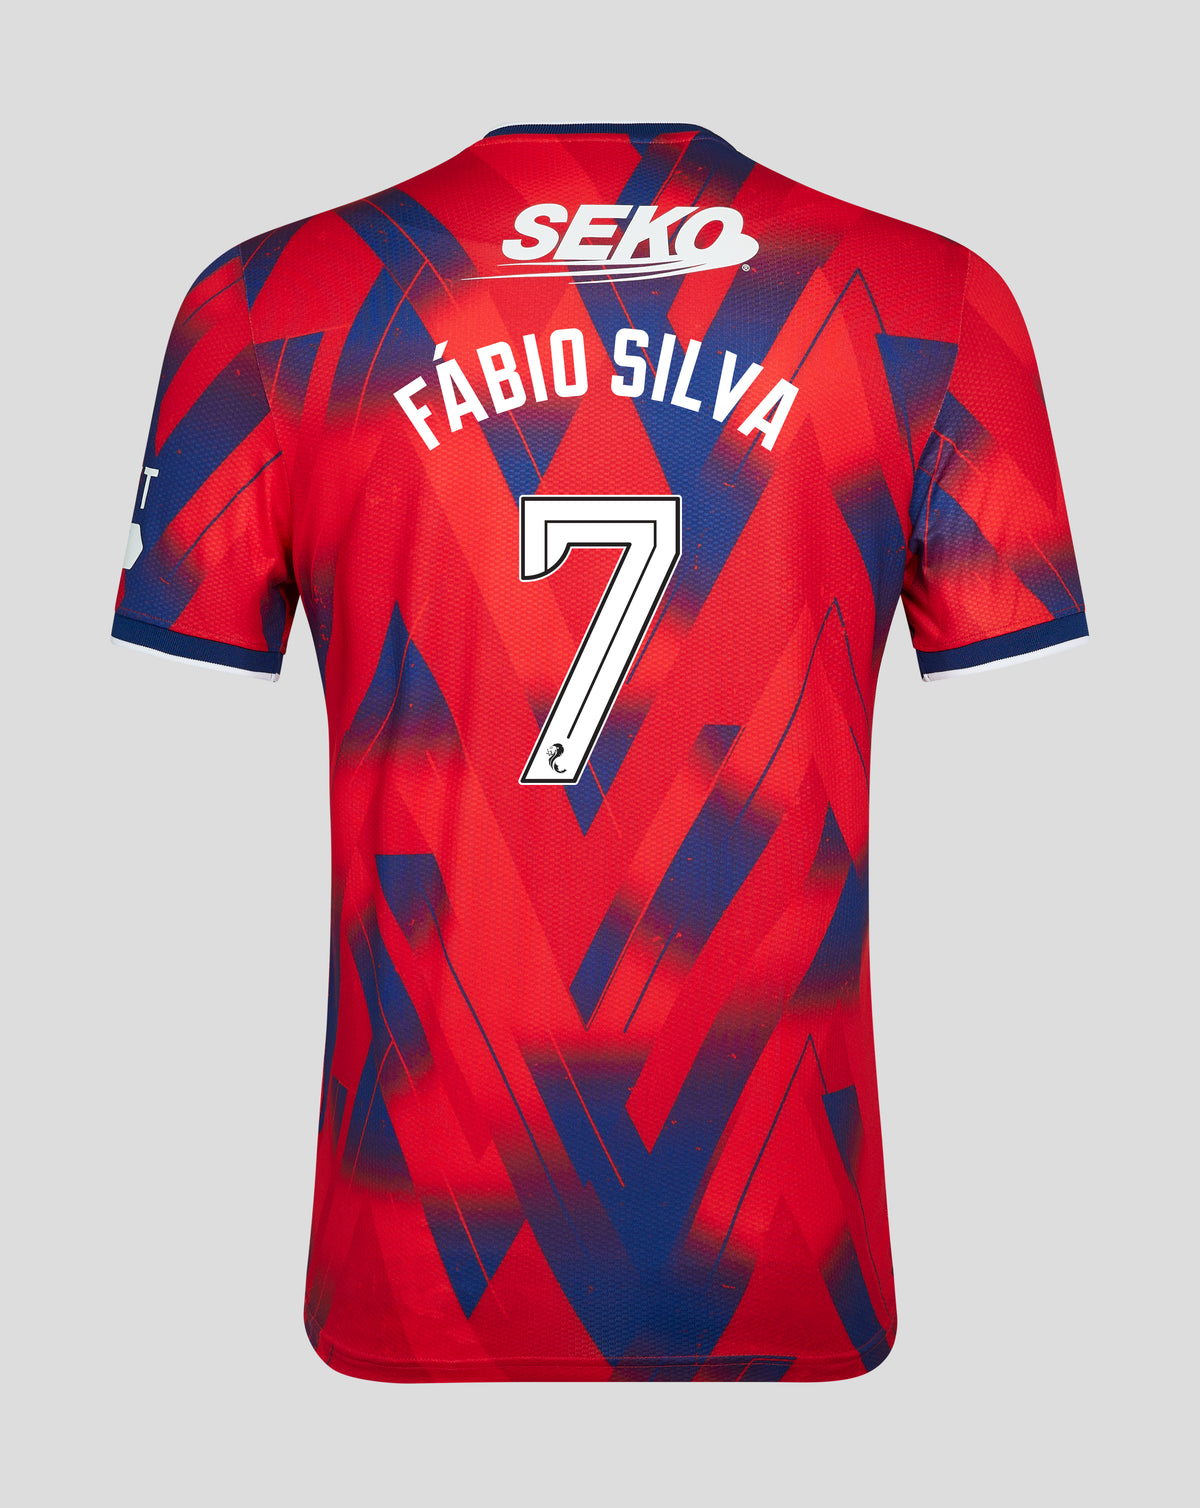 Fabio Silva - Fourth